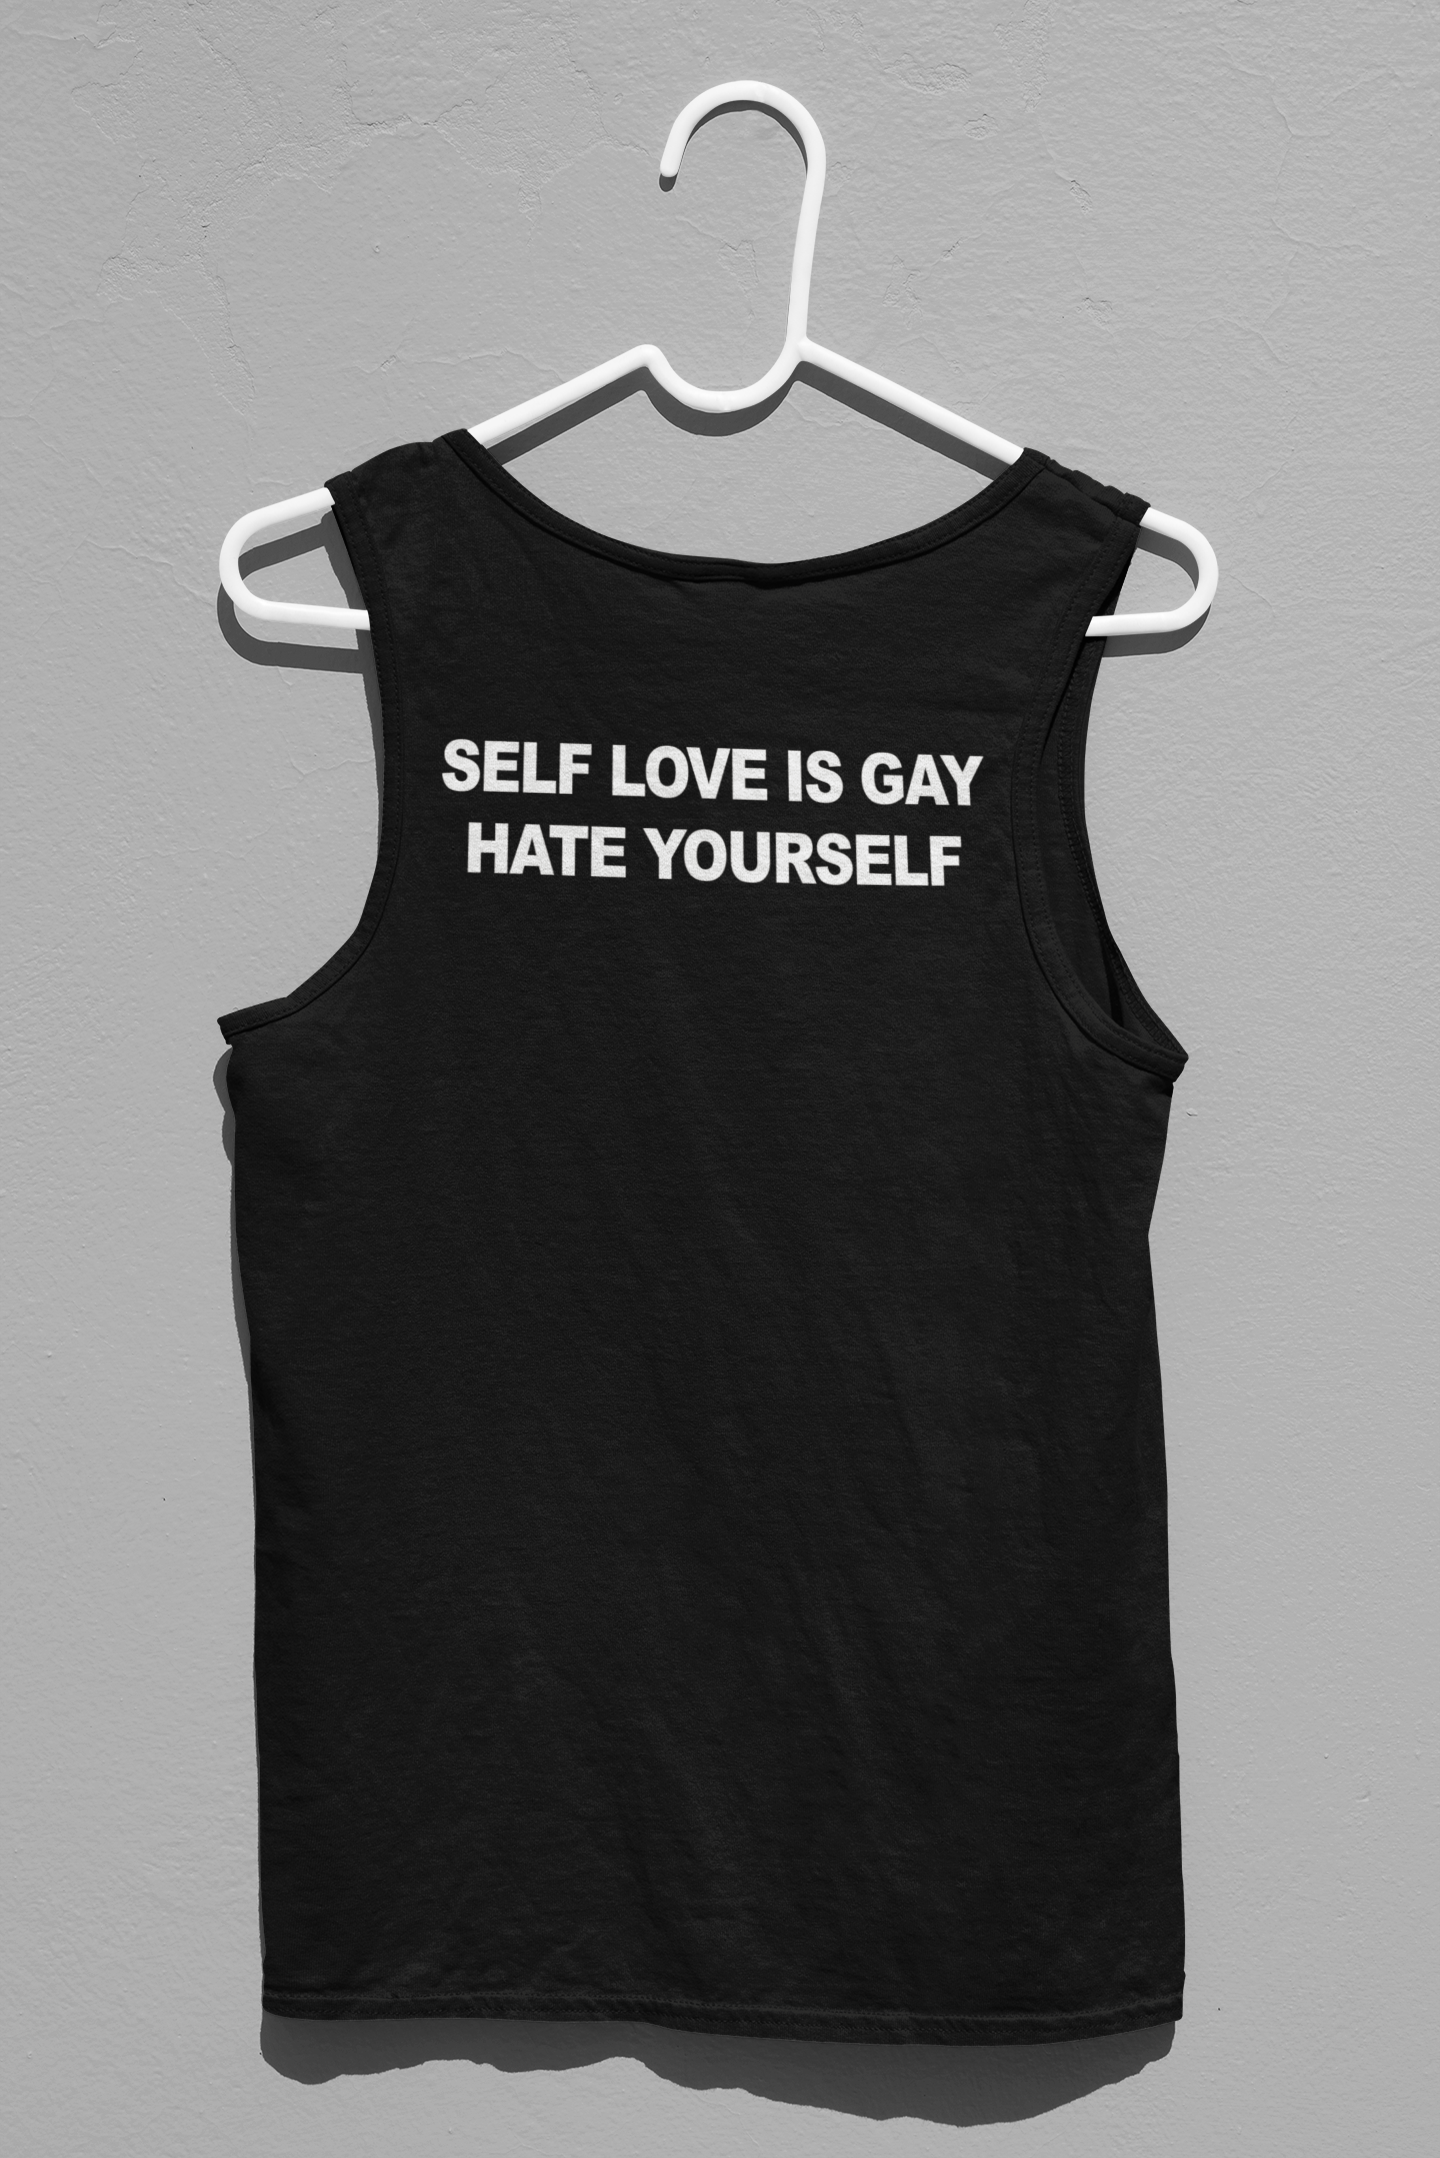 Self Love Is Gay Hate Yourself Simplistic Tank